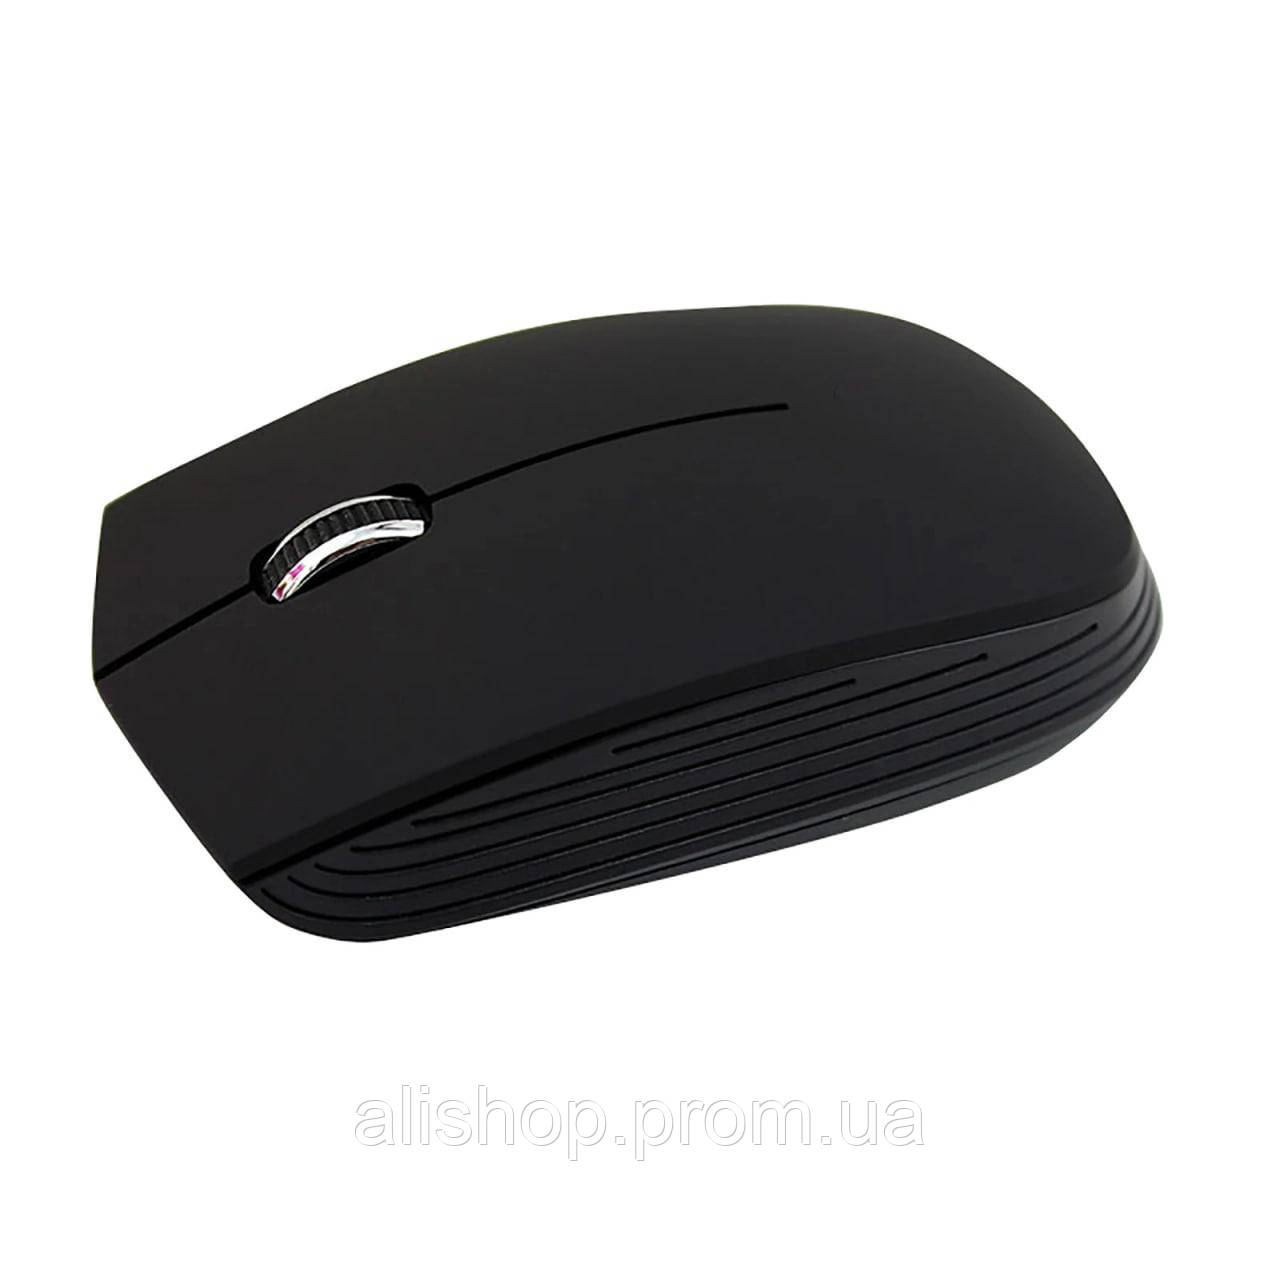 Бездротова миша 2,4 ГГц, з USB Bluetooth адаптером, оптично